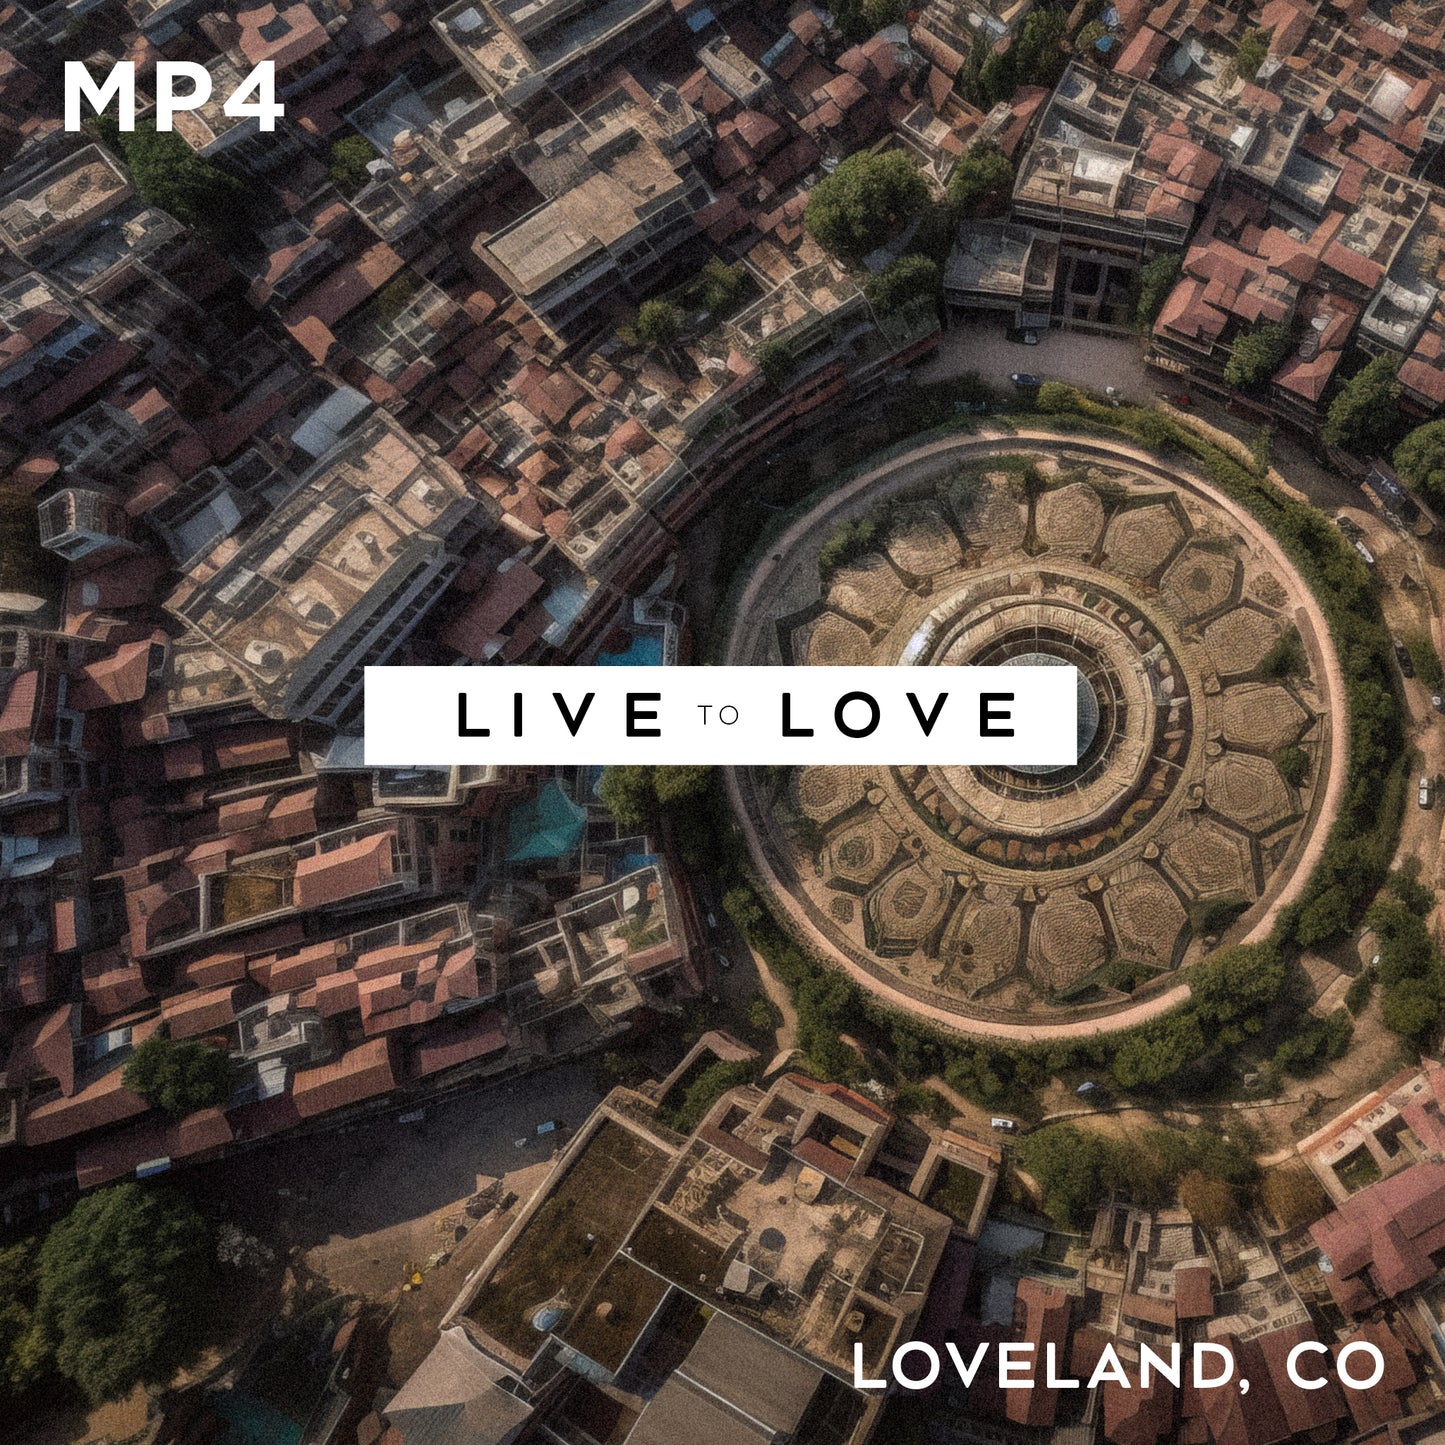 Live to Love: Loveland MP4s